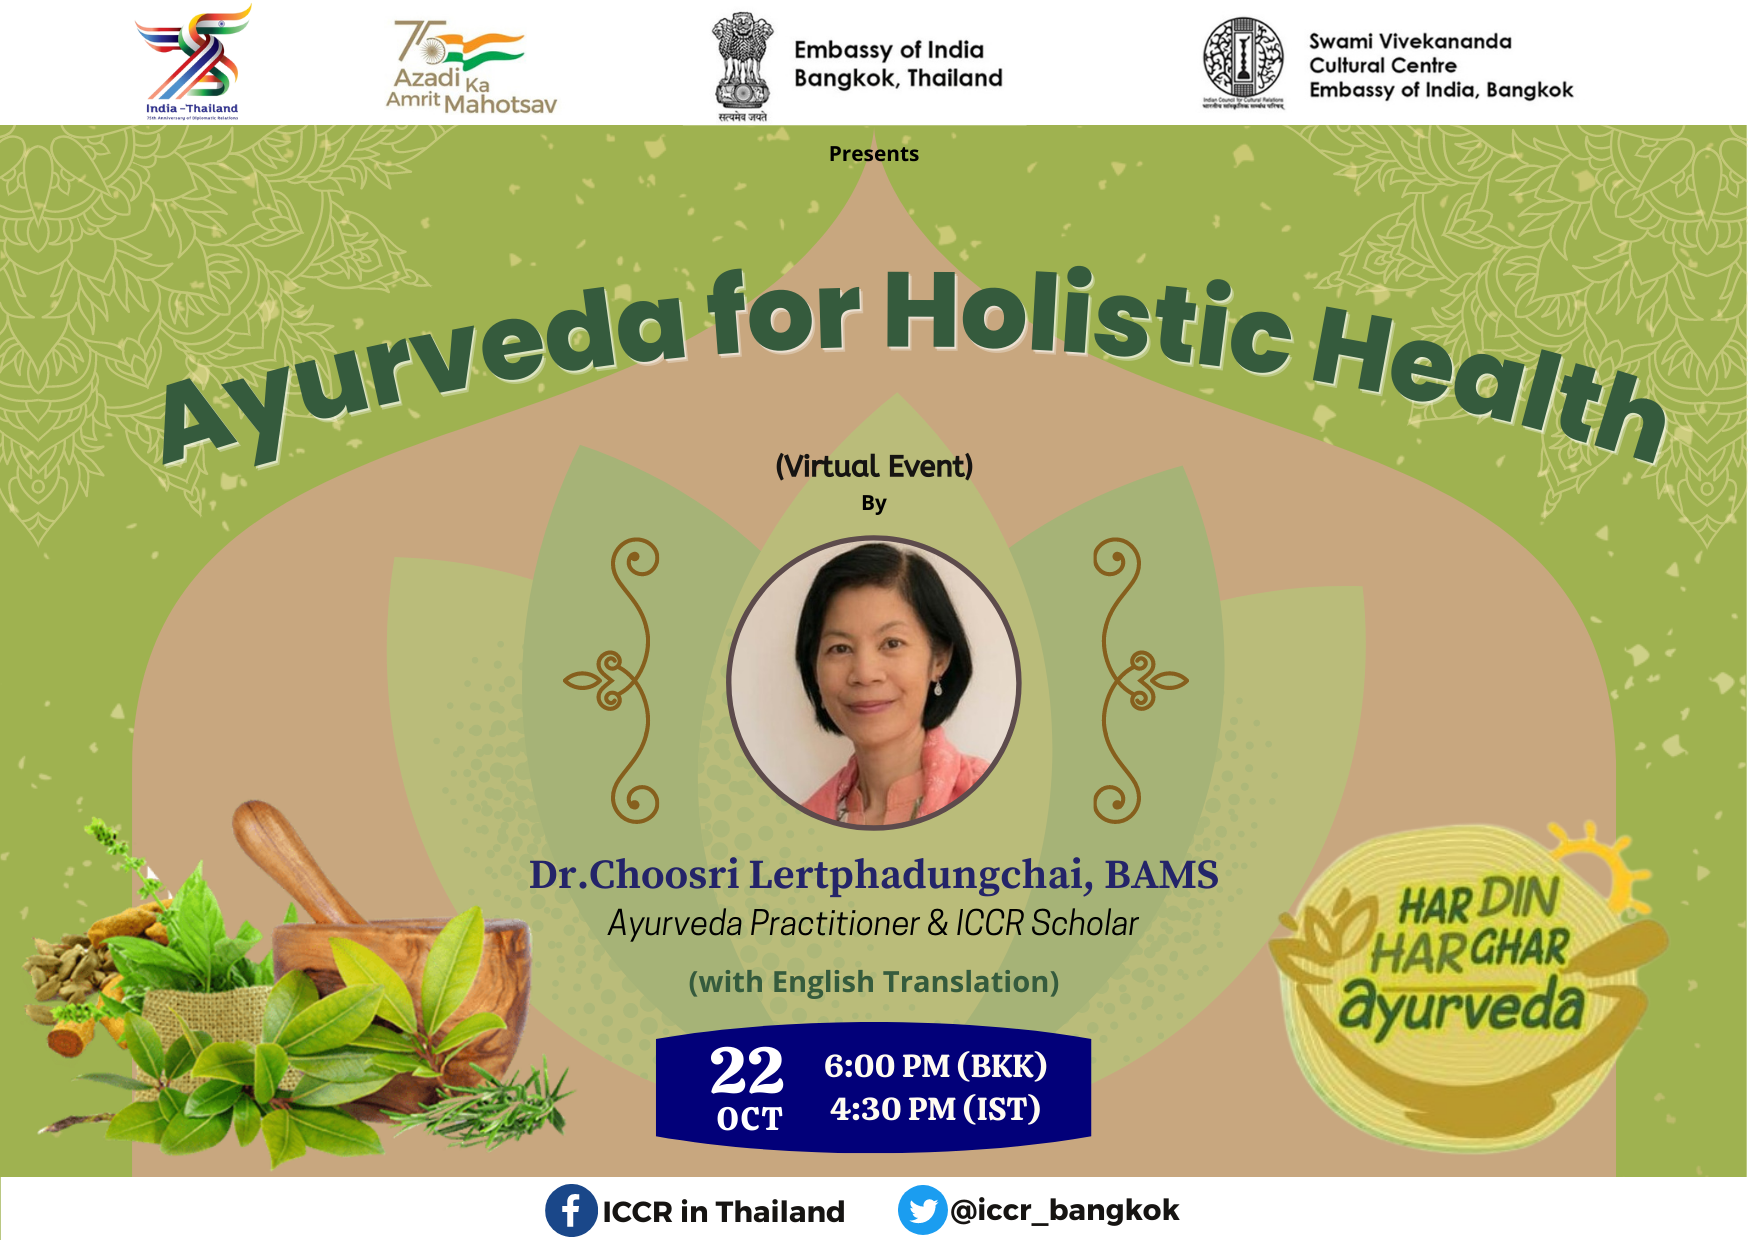 Ayurveda for Holistic Health" under the theme "Har Din Har Ghar Ayurveda by Khun Dr. Choosri Lertphadungchai, Ayurveda Practitioner in Thailand